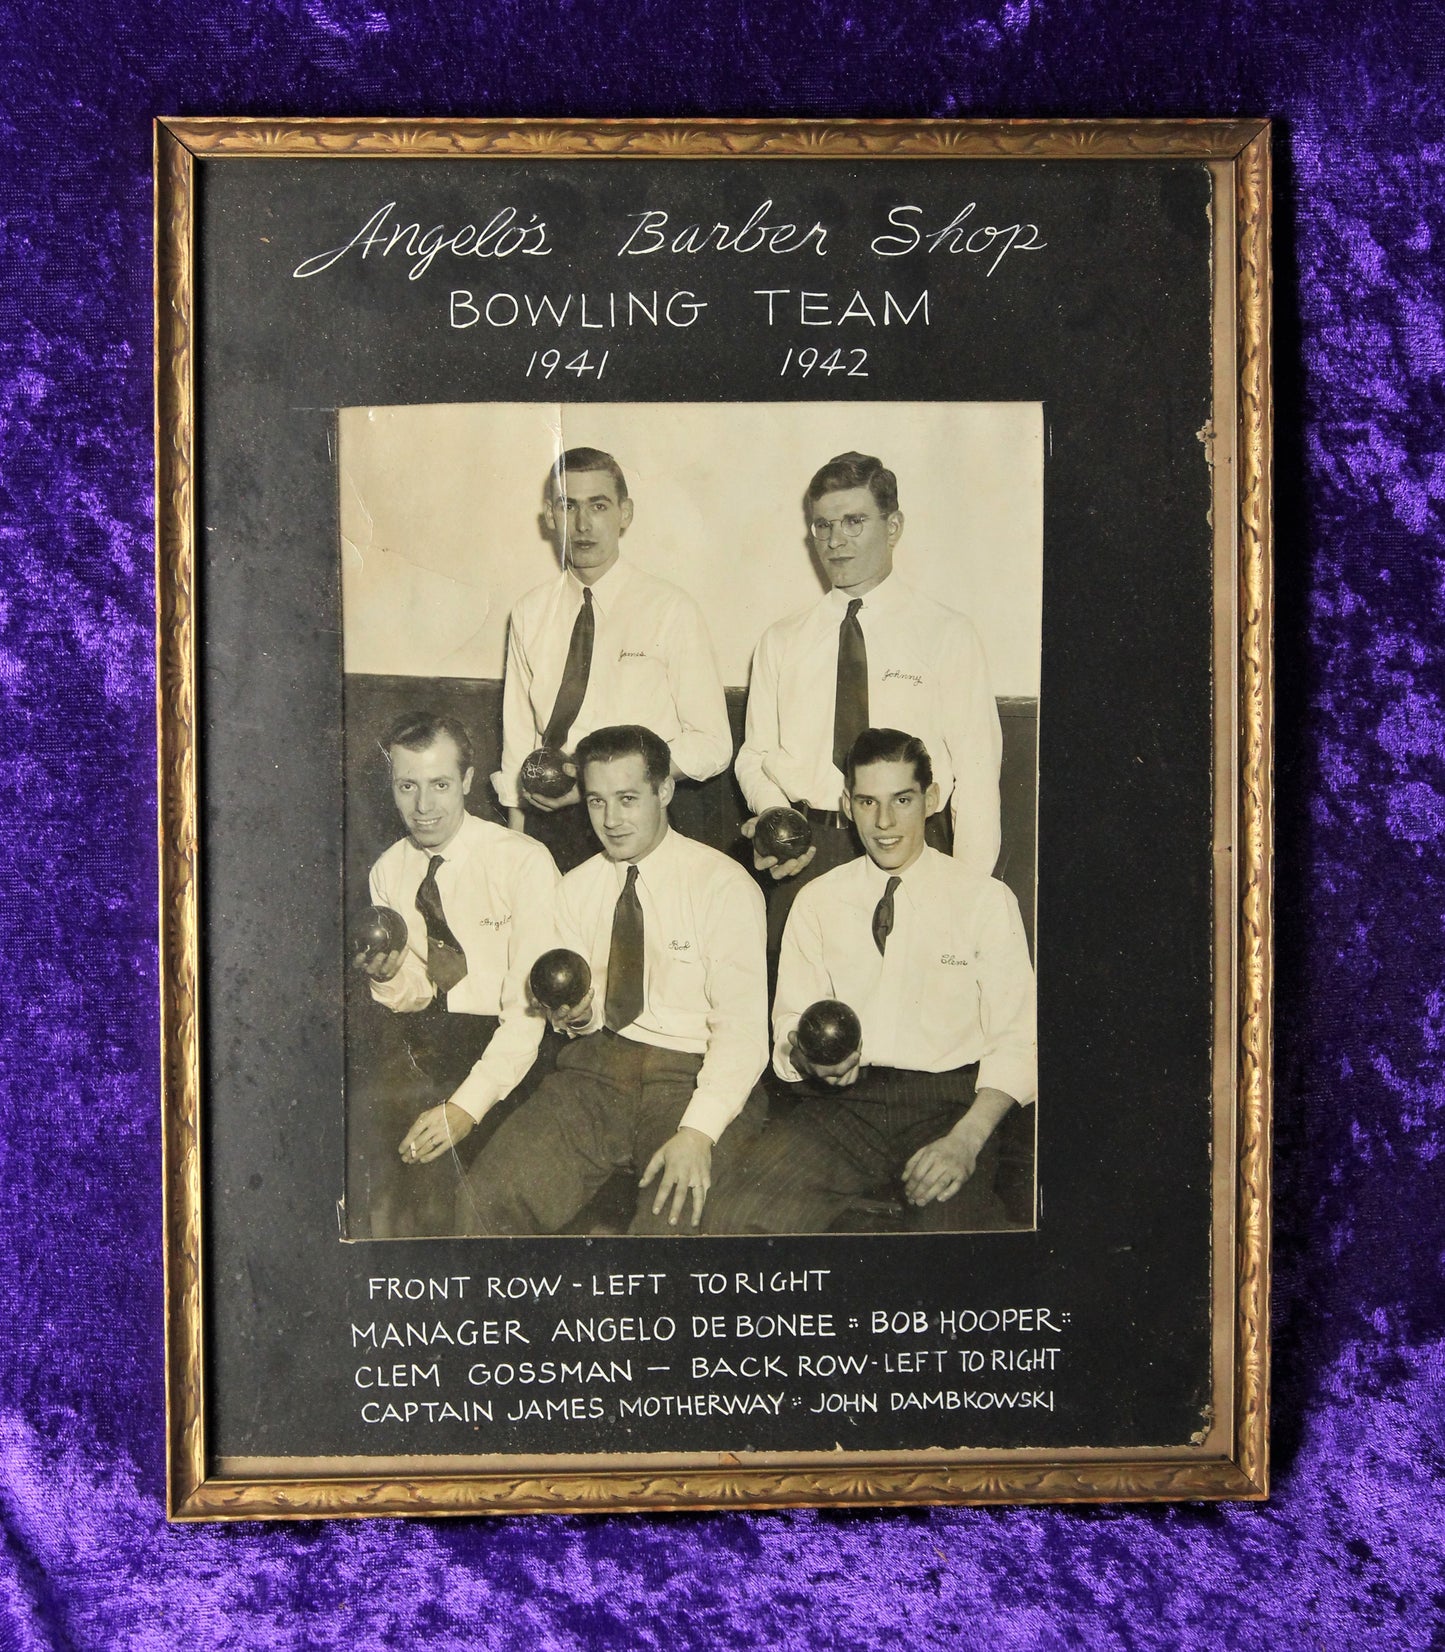 Angelo's Barber Shop Bowling Team Framed Photo, 1941-1942, 12" x 15"